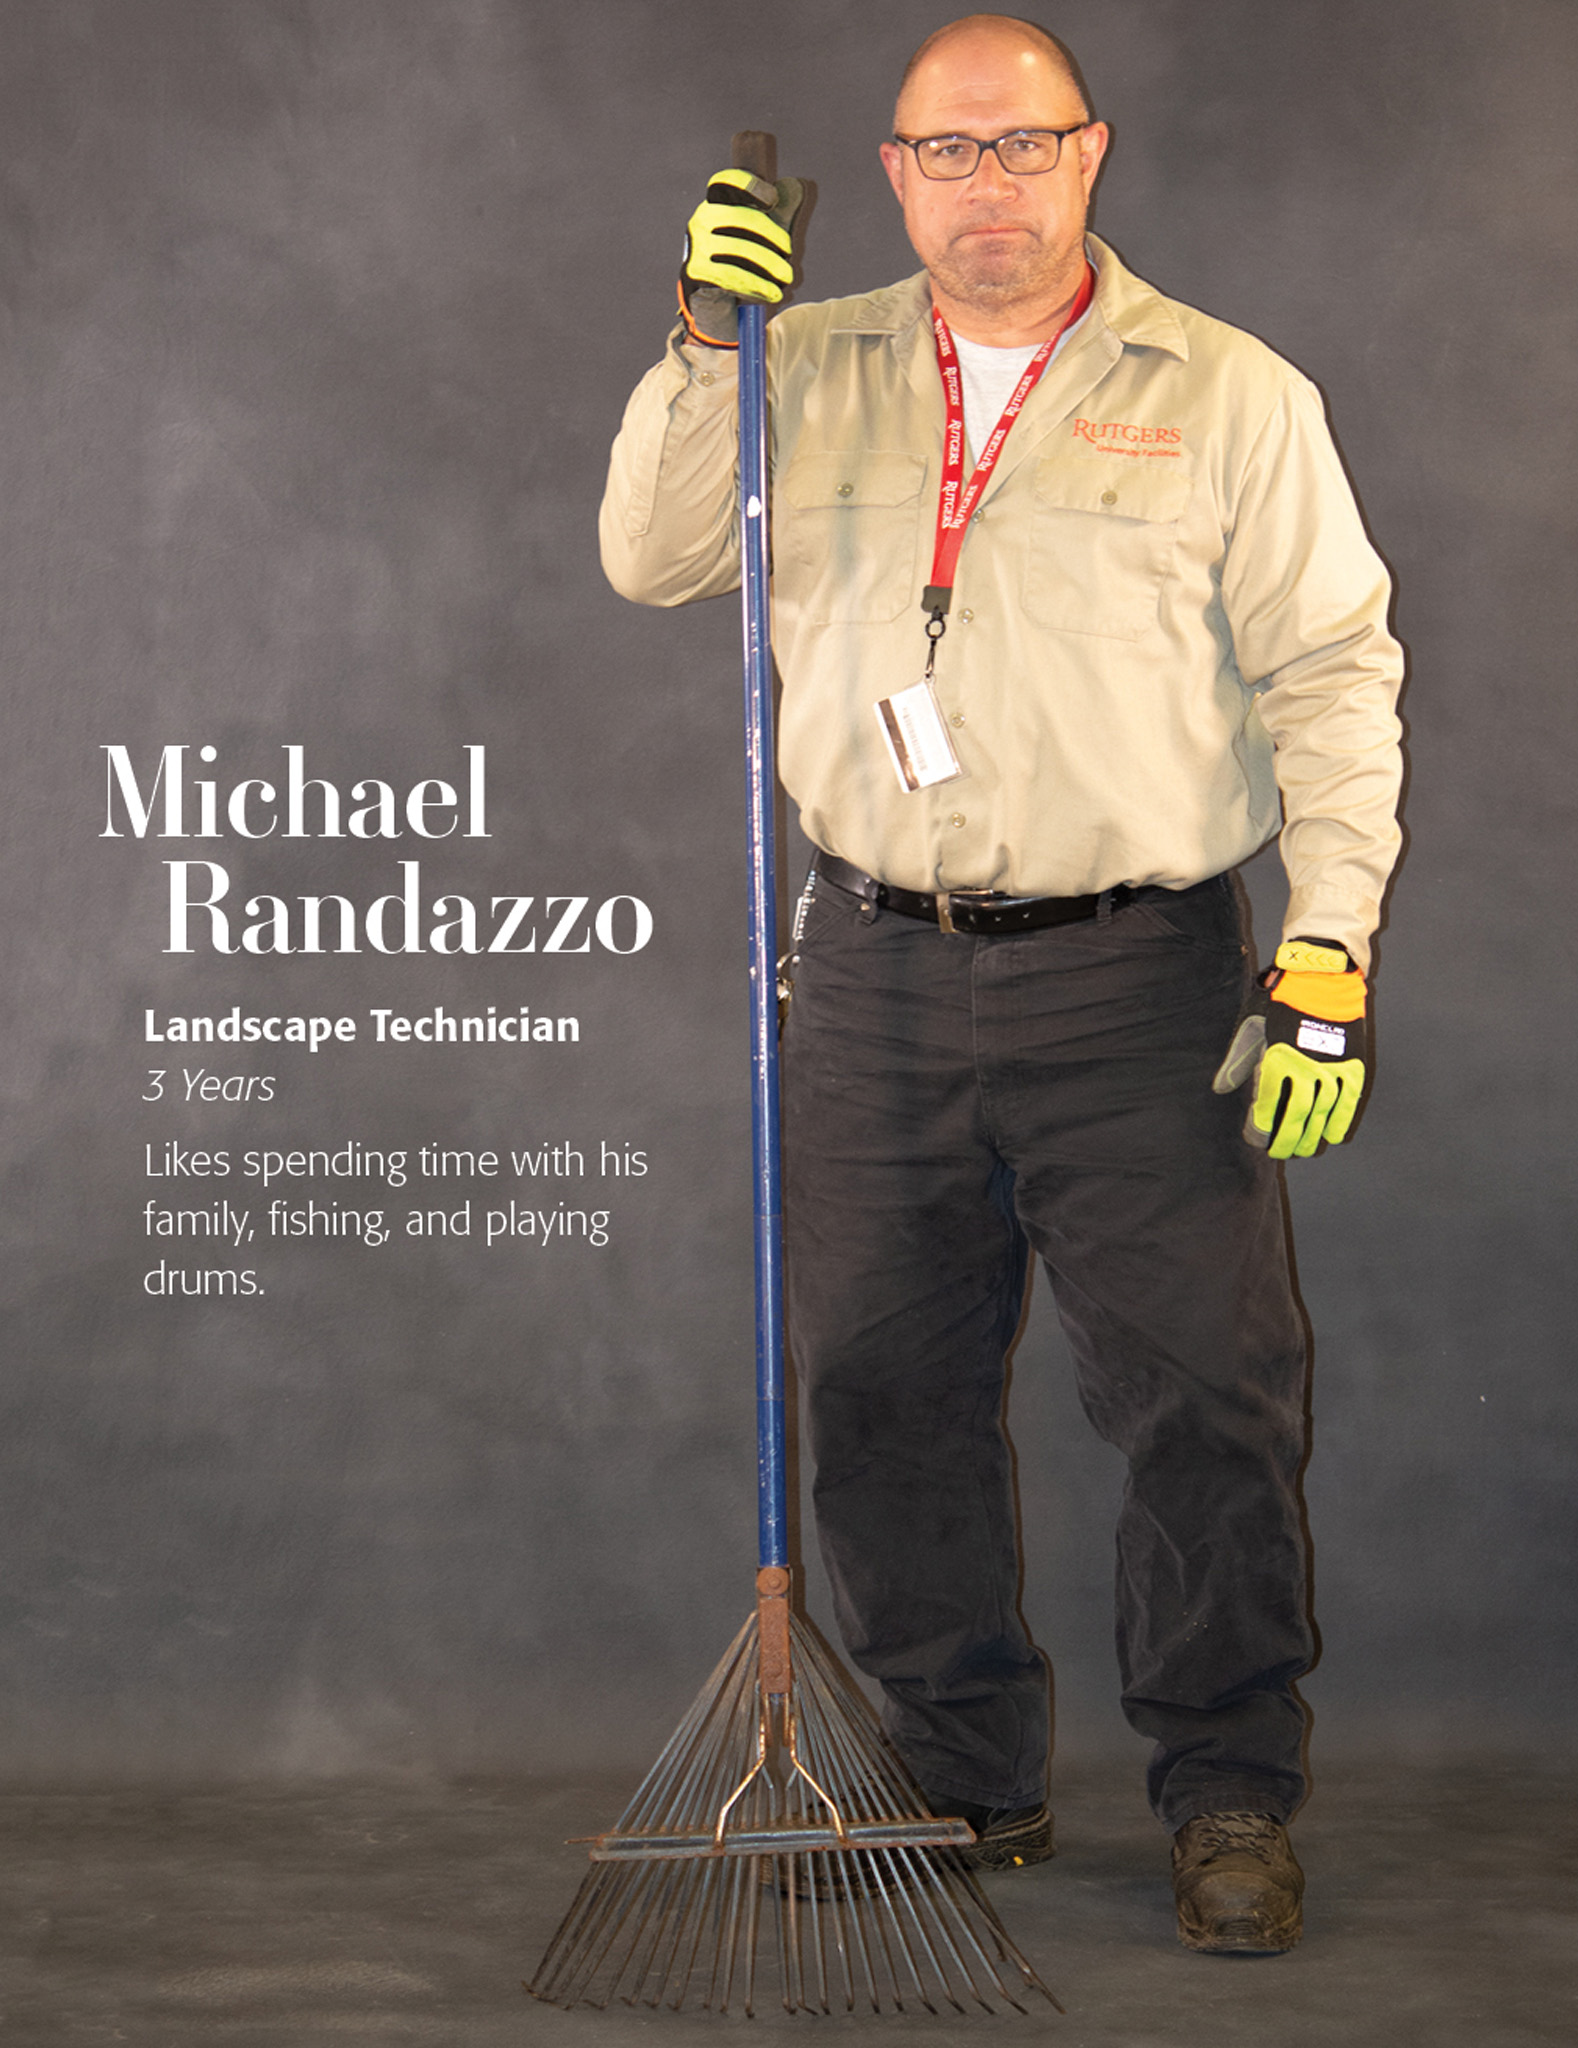 Michael Randazzo